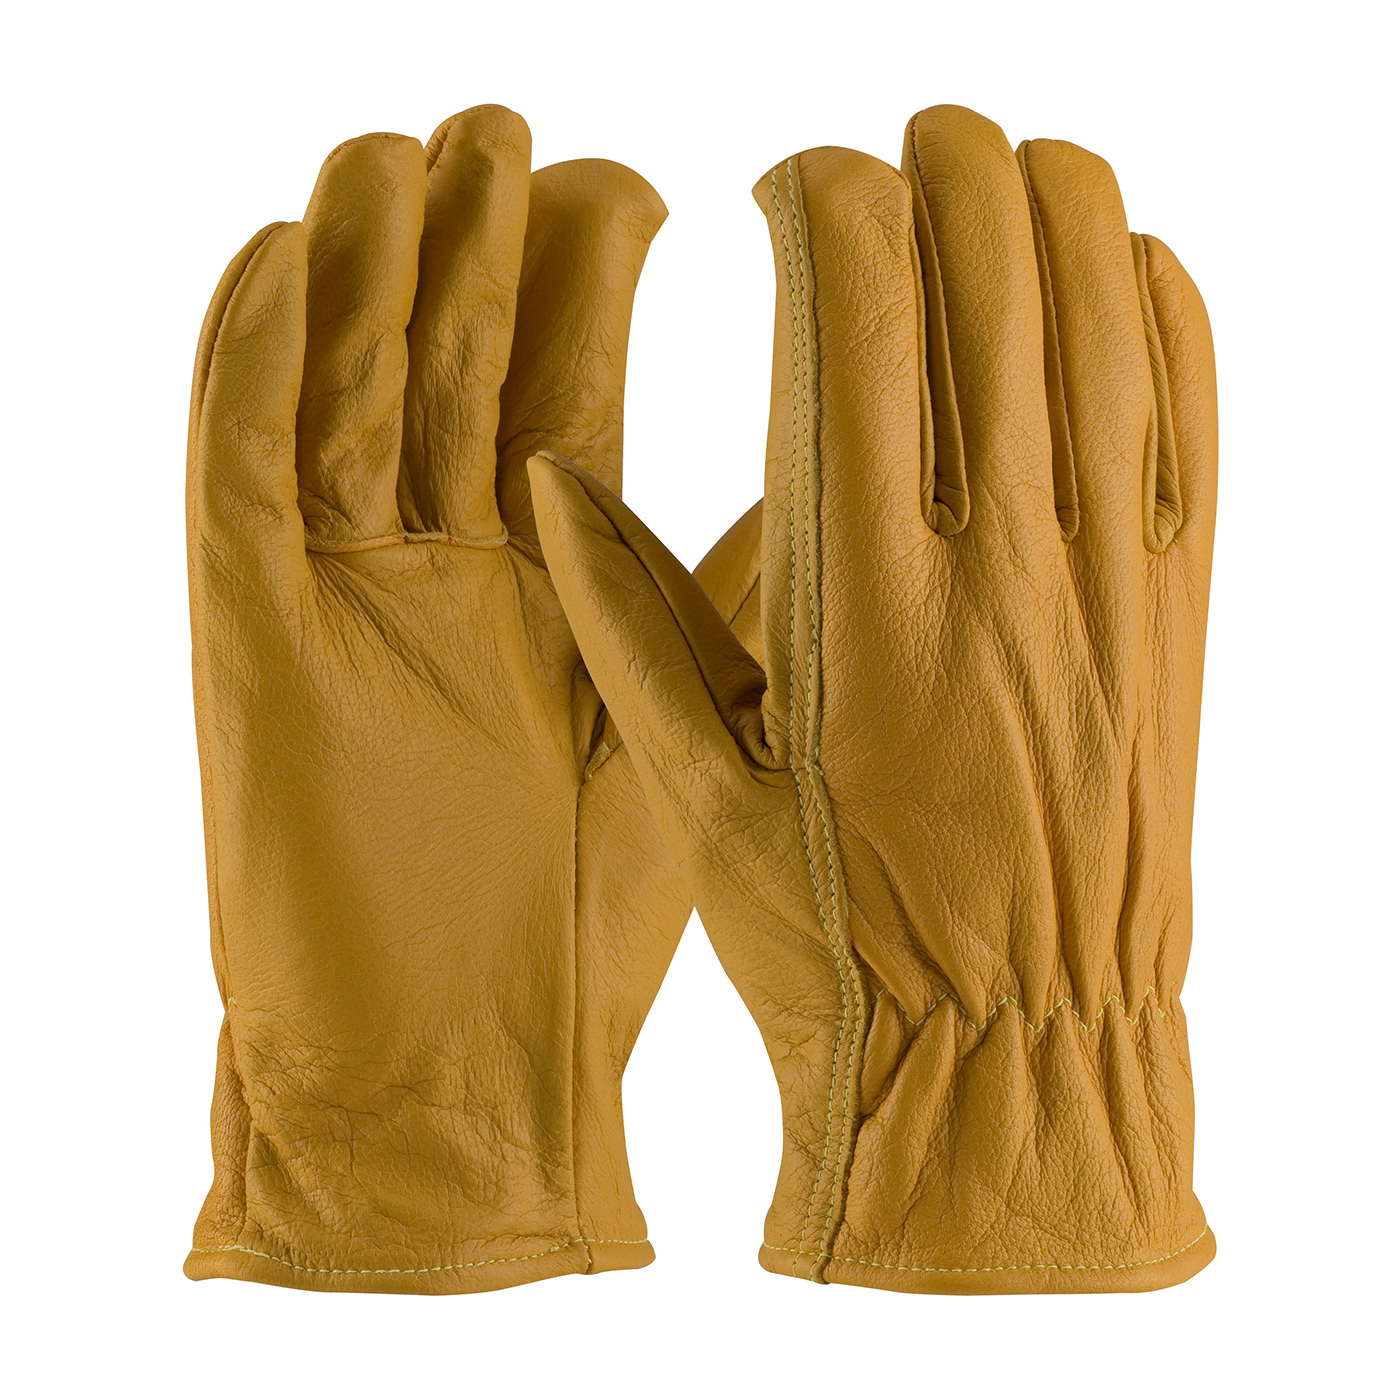 PIP 09-K3700/L Kut Gard Top Grain Goatskin Leather Glove with Kevlar Liner - Light Weight - Large PID-09 K3700 L